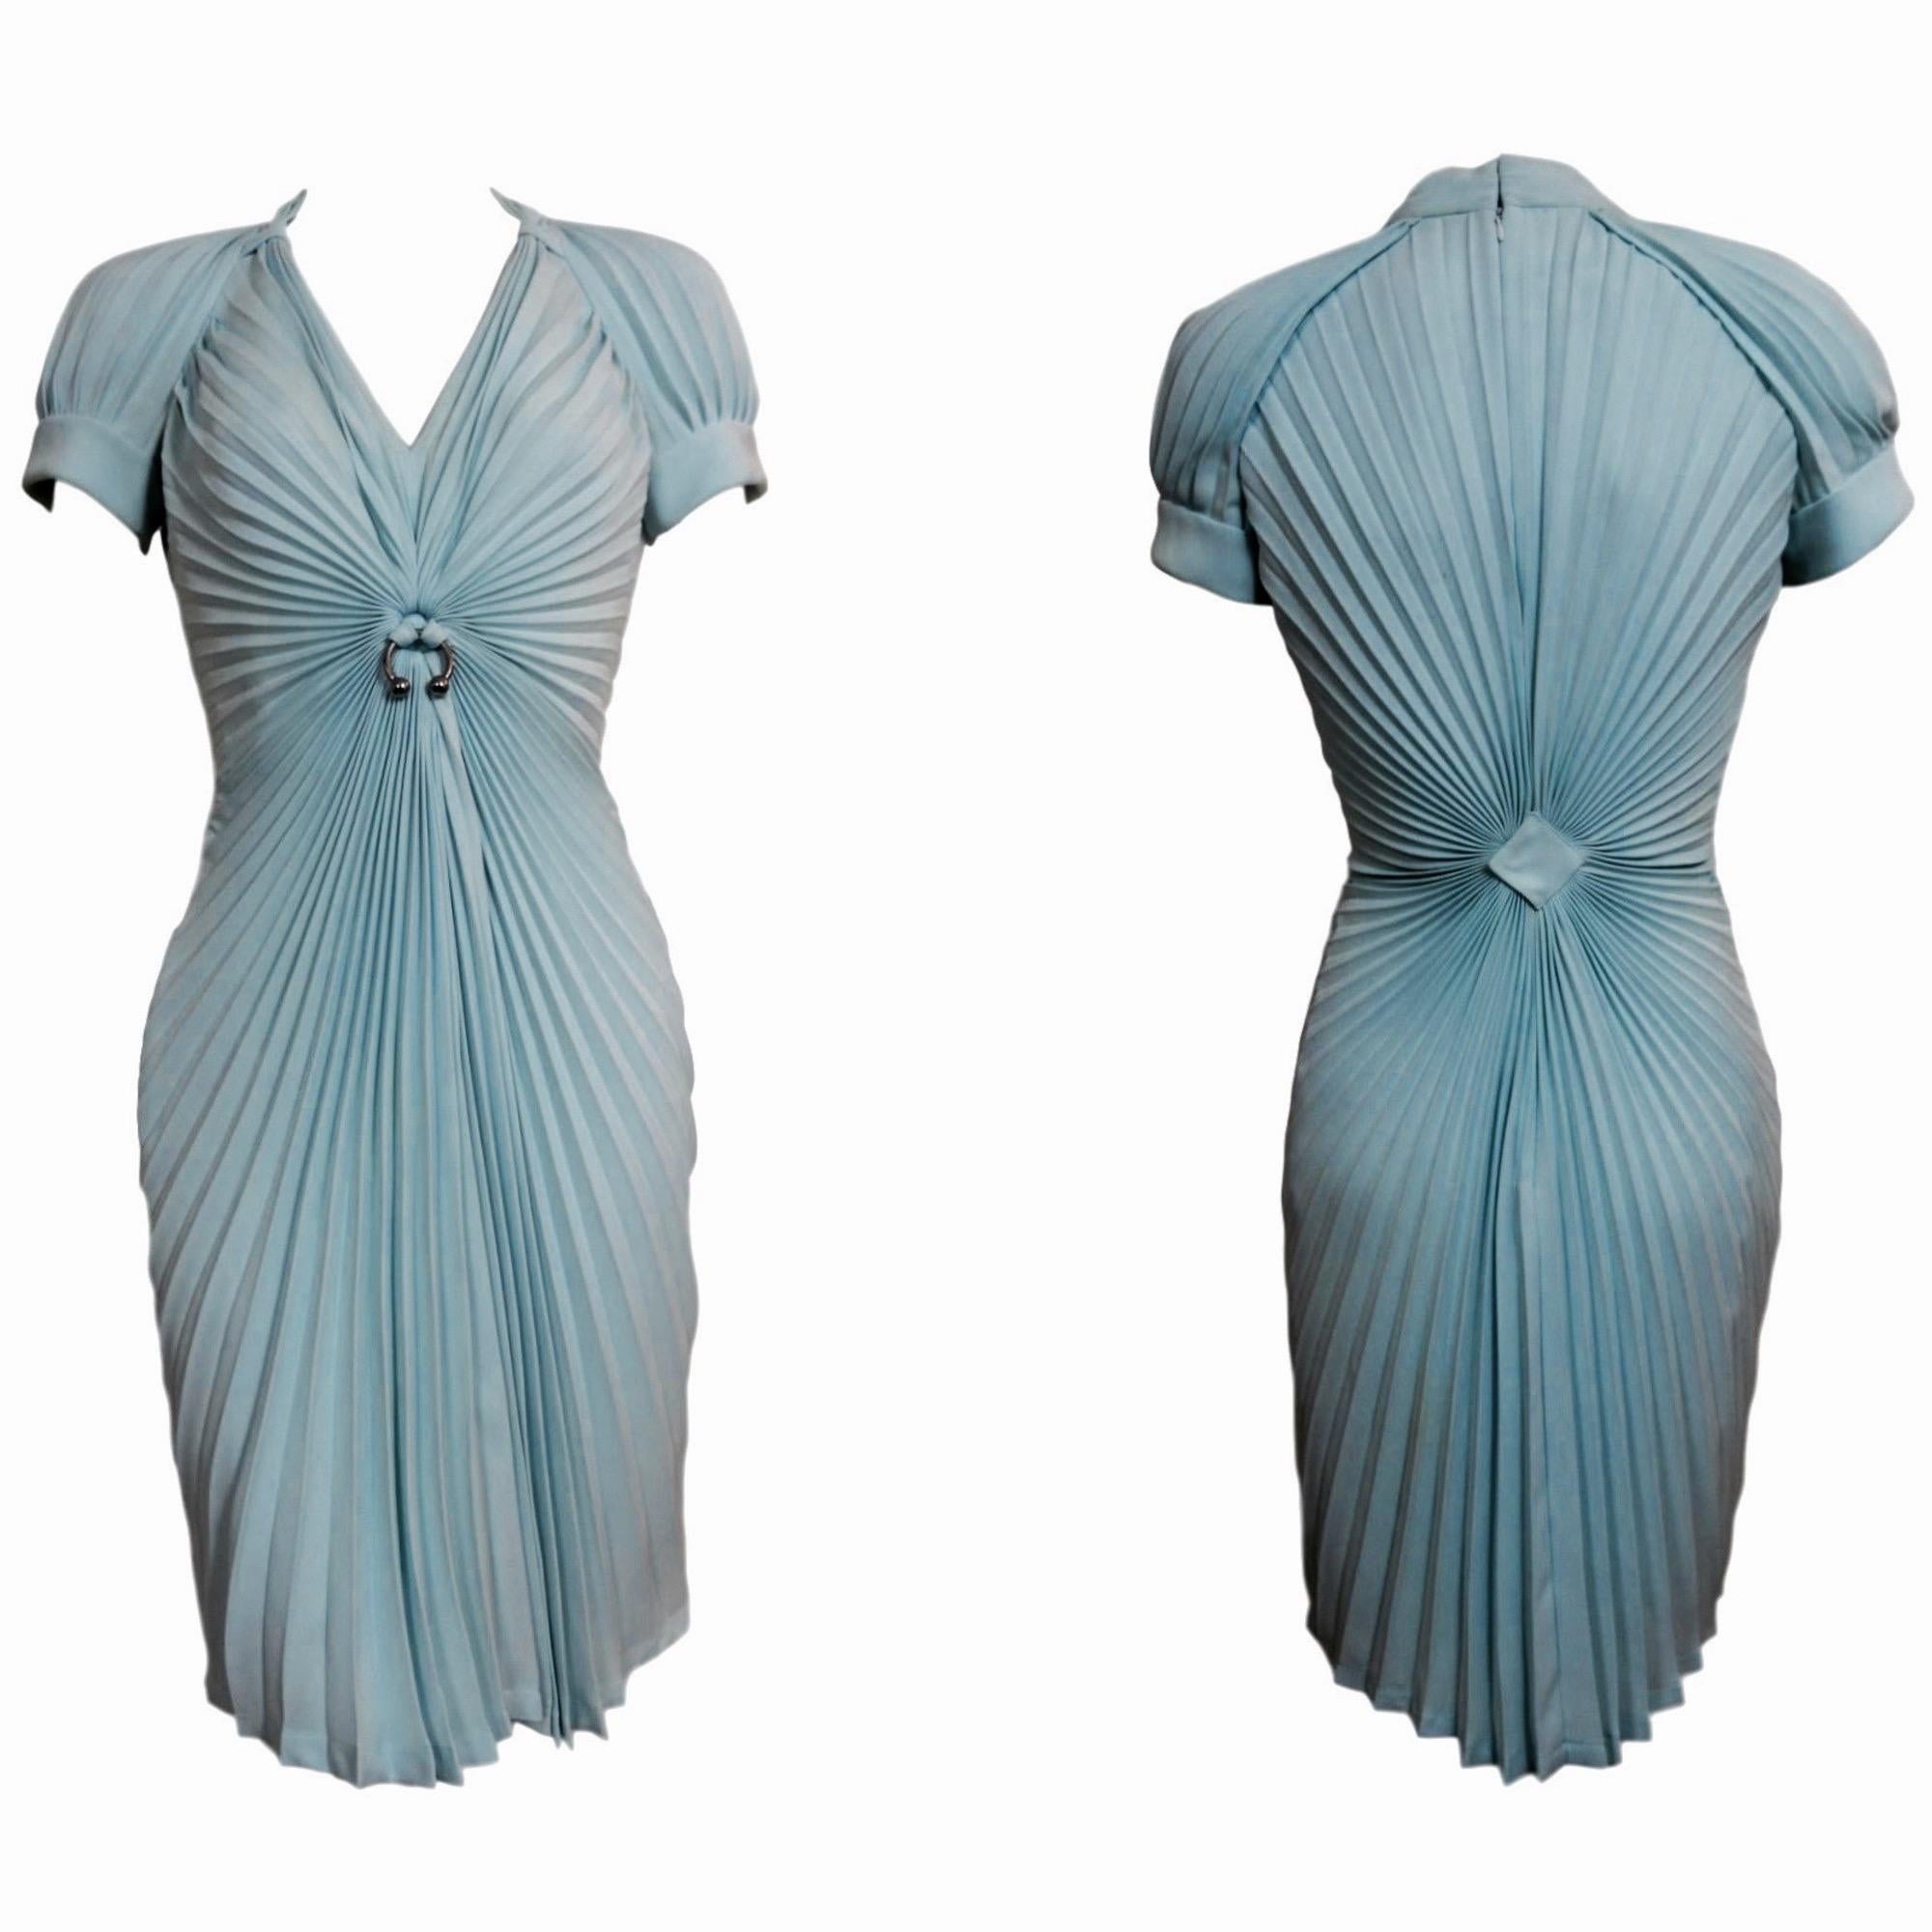 Thierry Mugler
Pleated Starburst Dress
Size 38
30 inch Bust
26 inch Waist
38 inch Back Neck to Hem